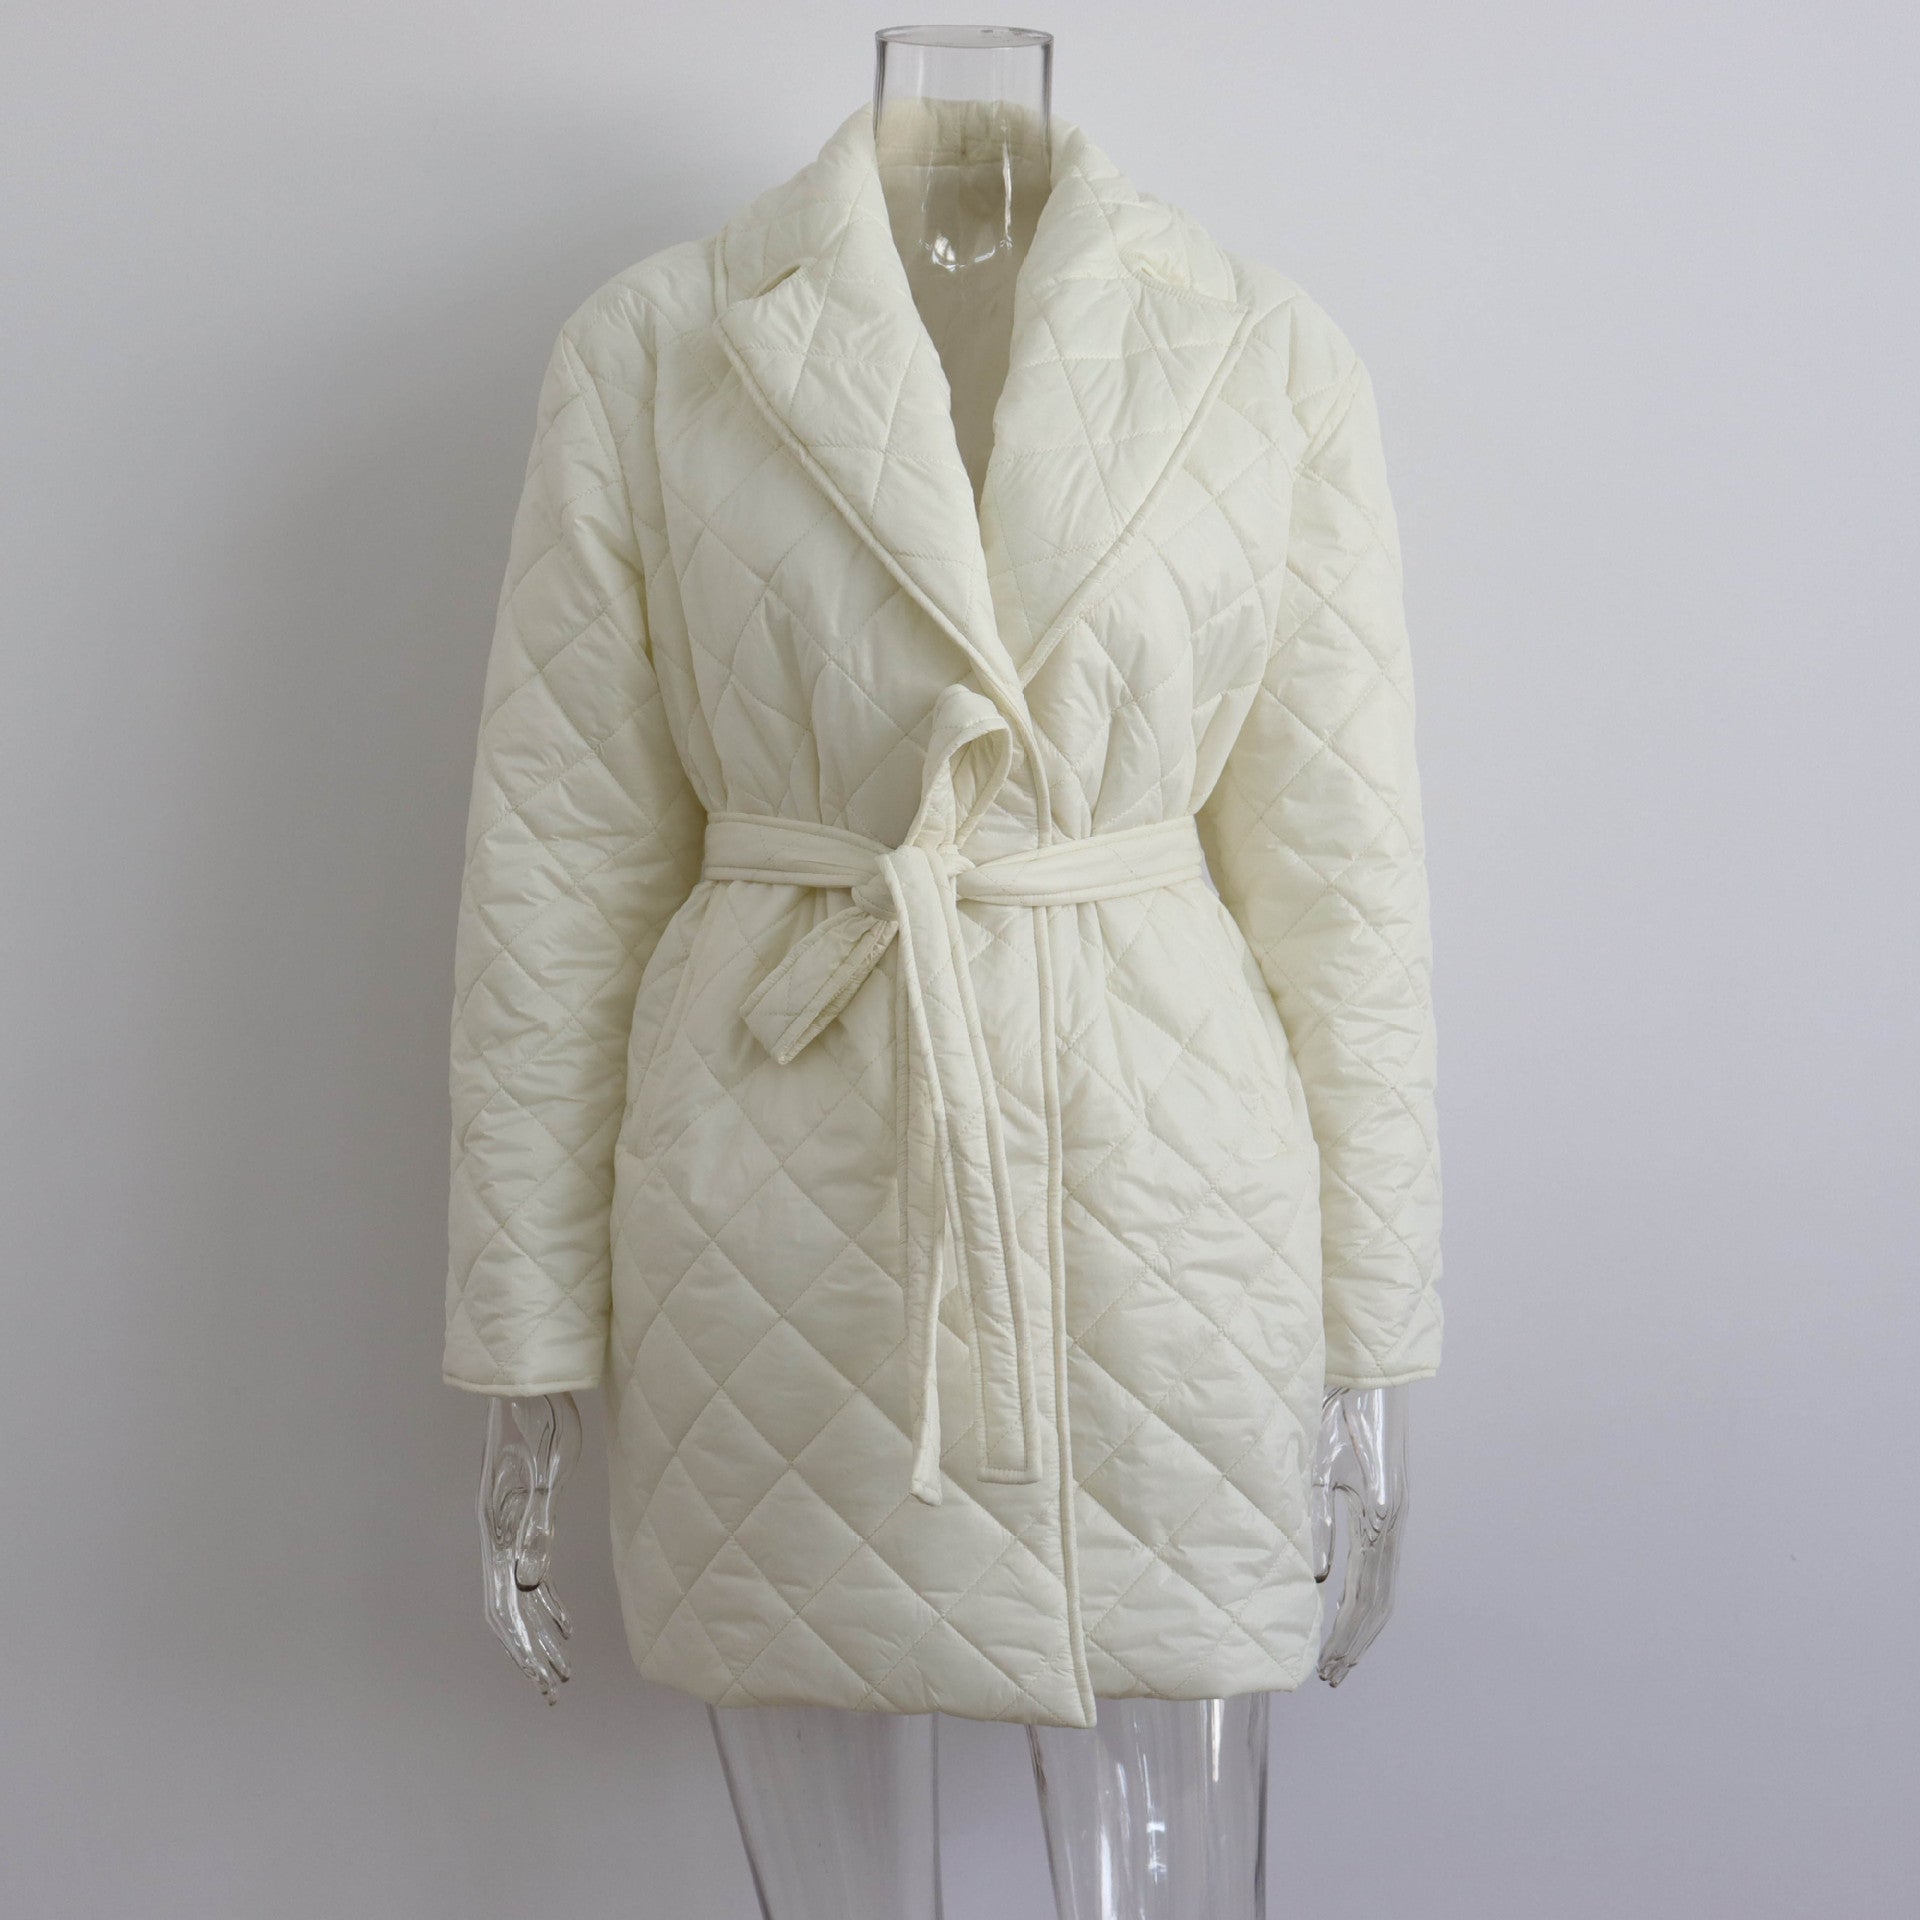 Rhombus Cotton Padded Mid-Length Collared Autumn Winter Street Women Coat Waist-Controlled Pocket Cotton Padded Coat for Women